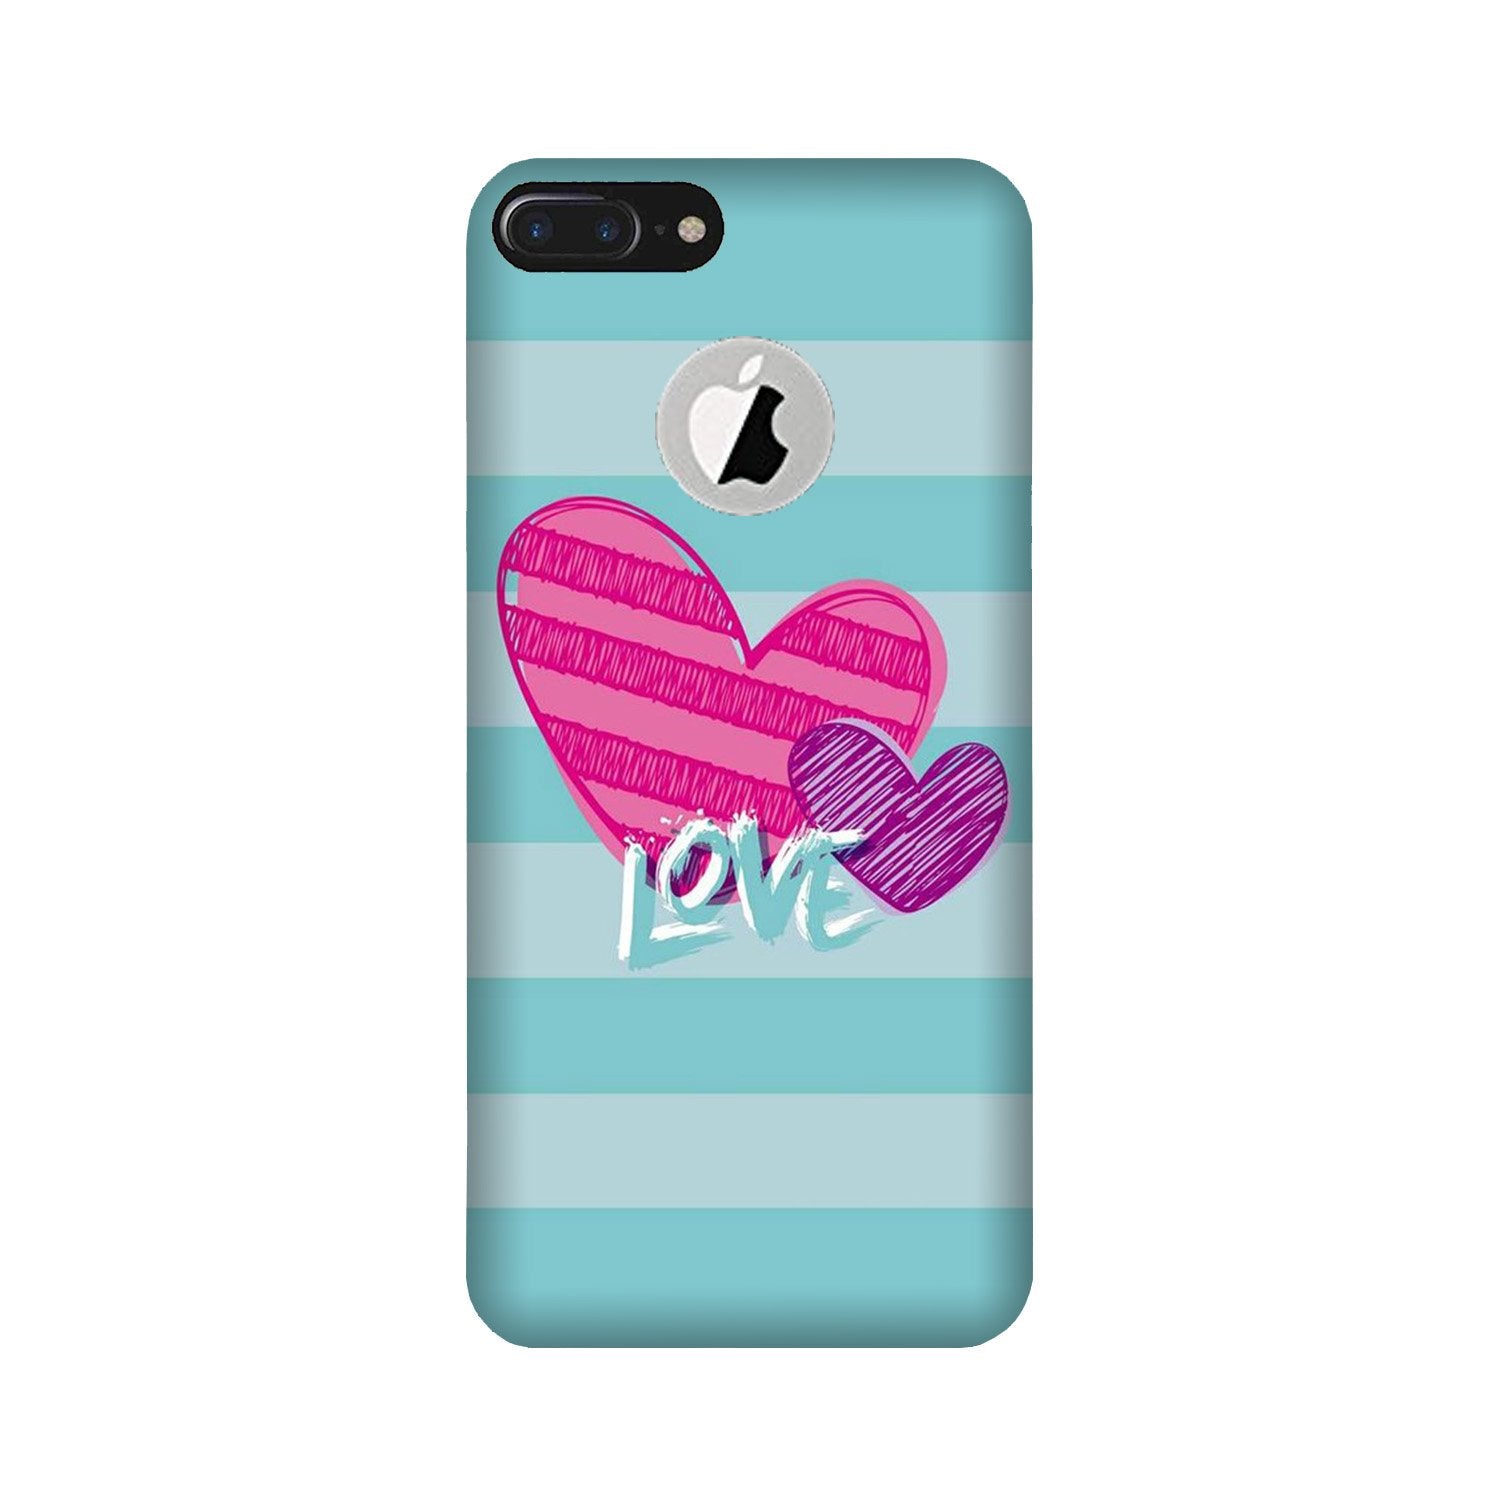 Love Case for iPhone 7 Plus logo cut (Design No. 299)